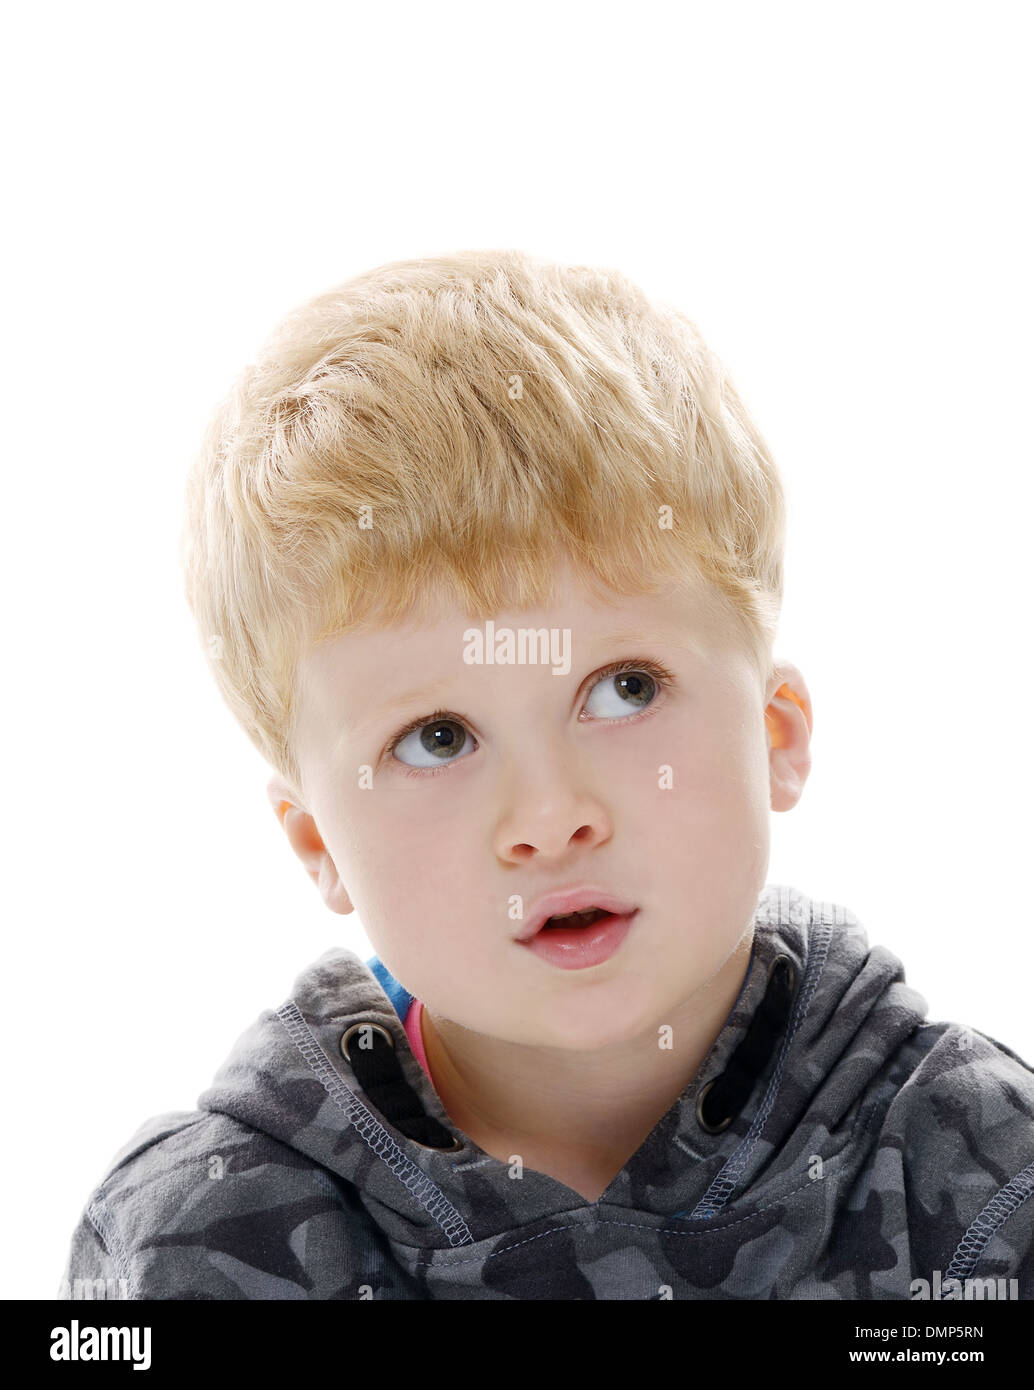 Young caucasian blond boy portrait looks away Stock Photo